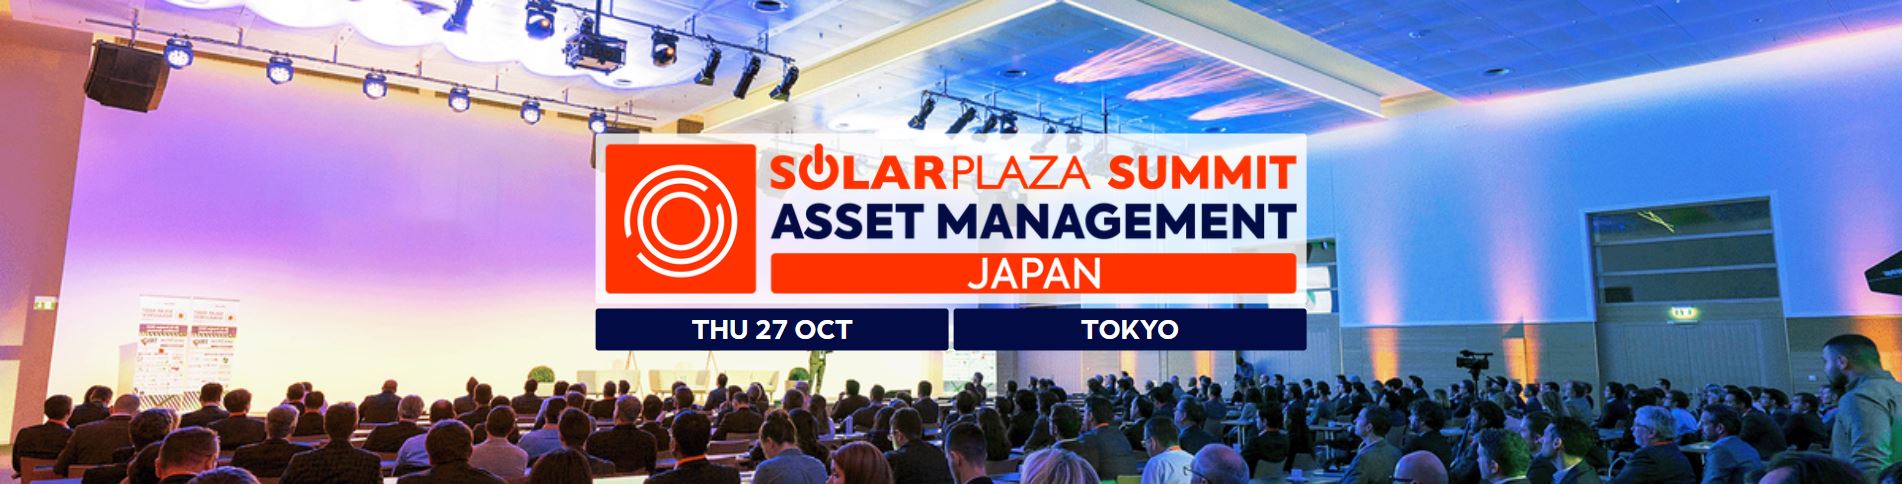 Solarplaza Summit「Asset Management Japan」